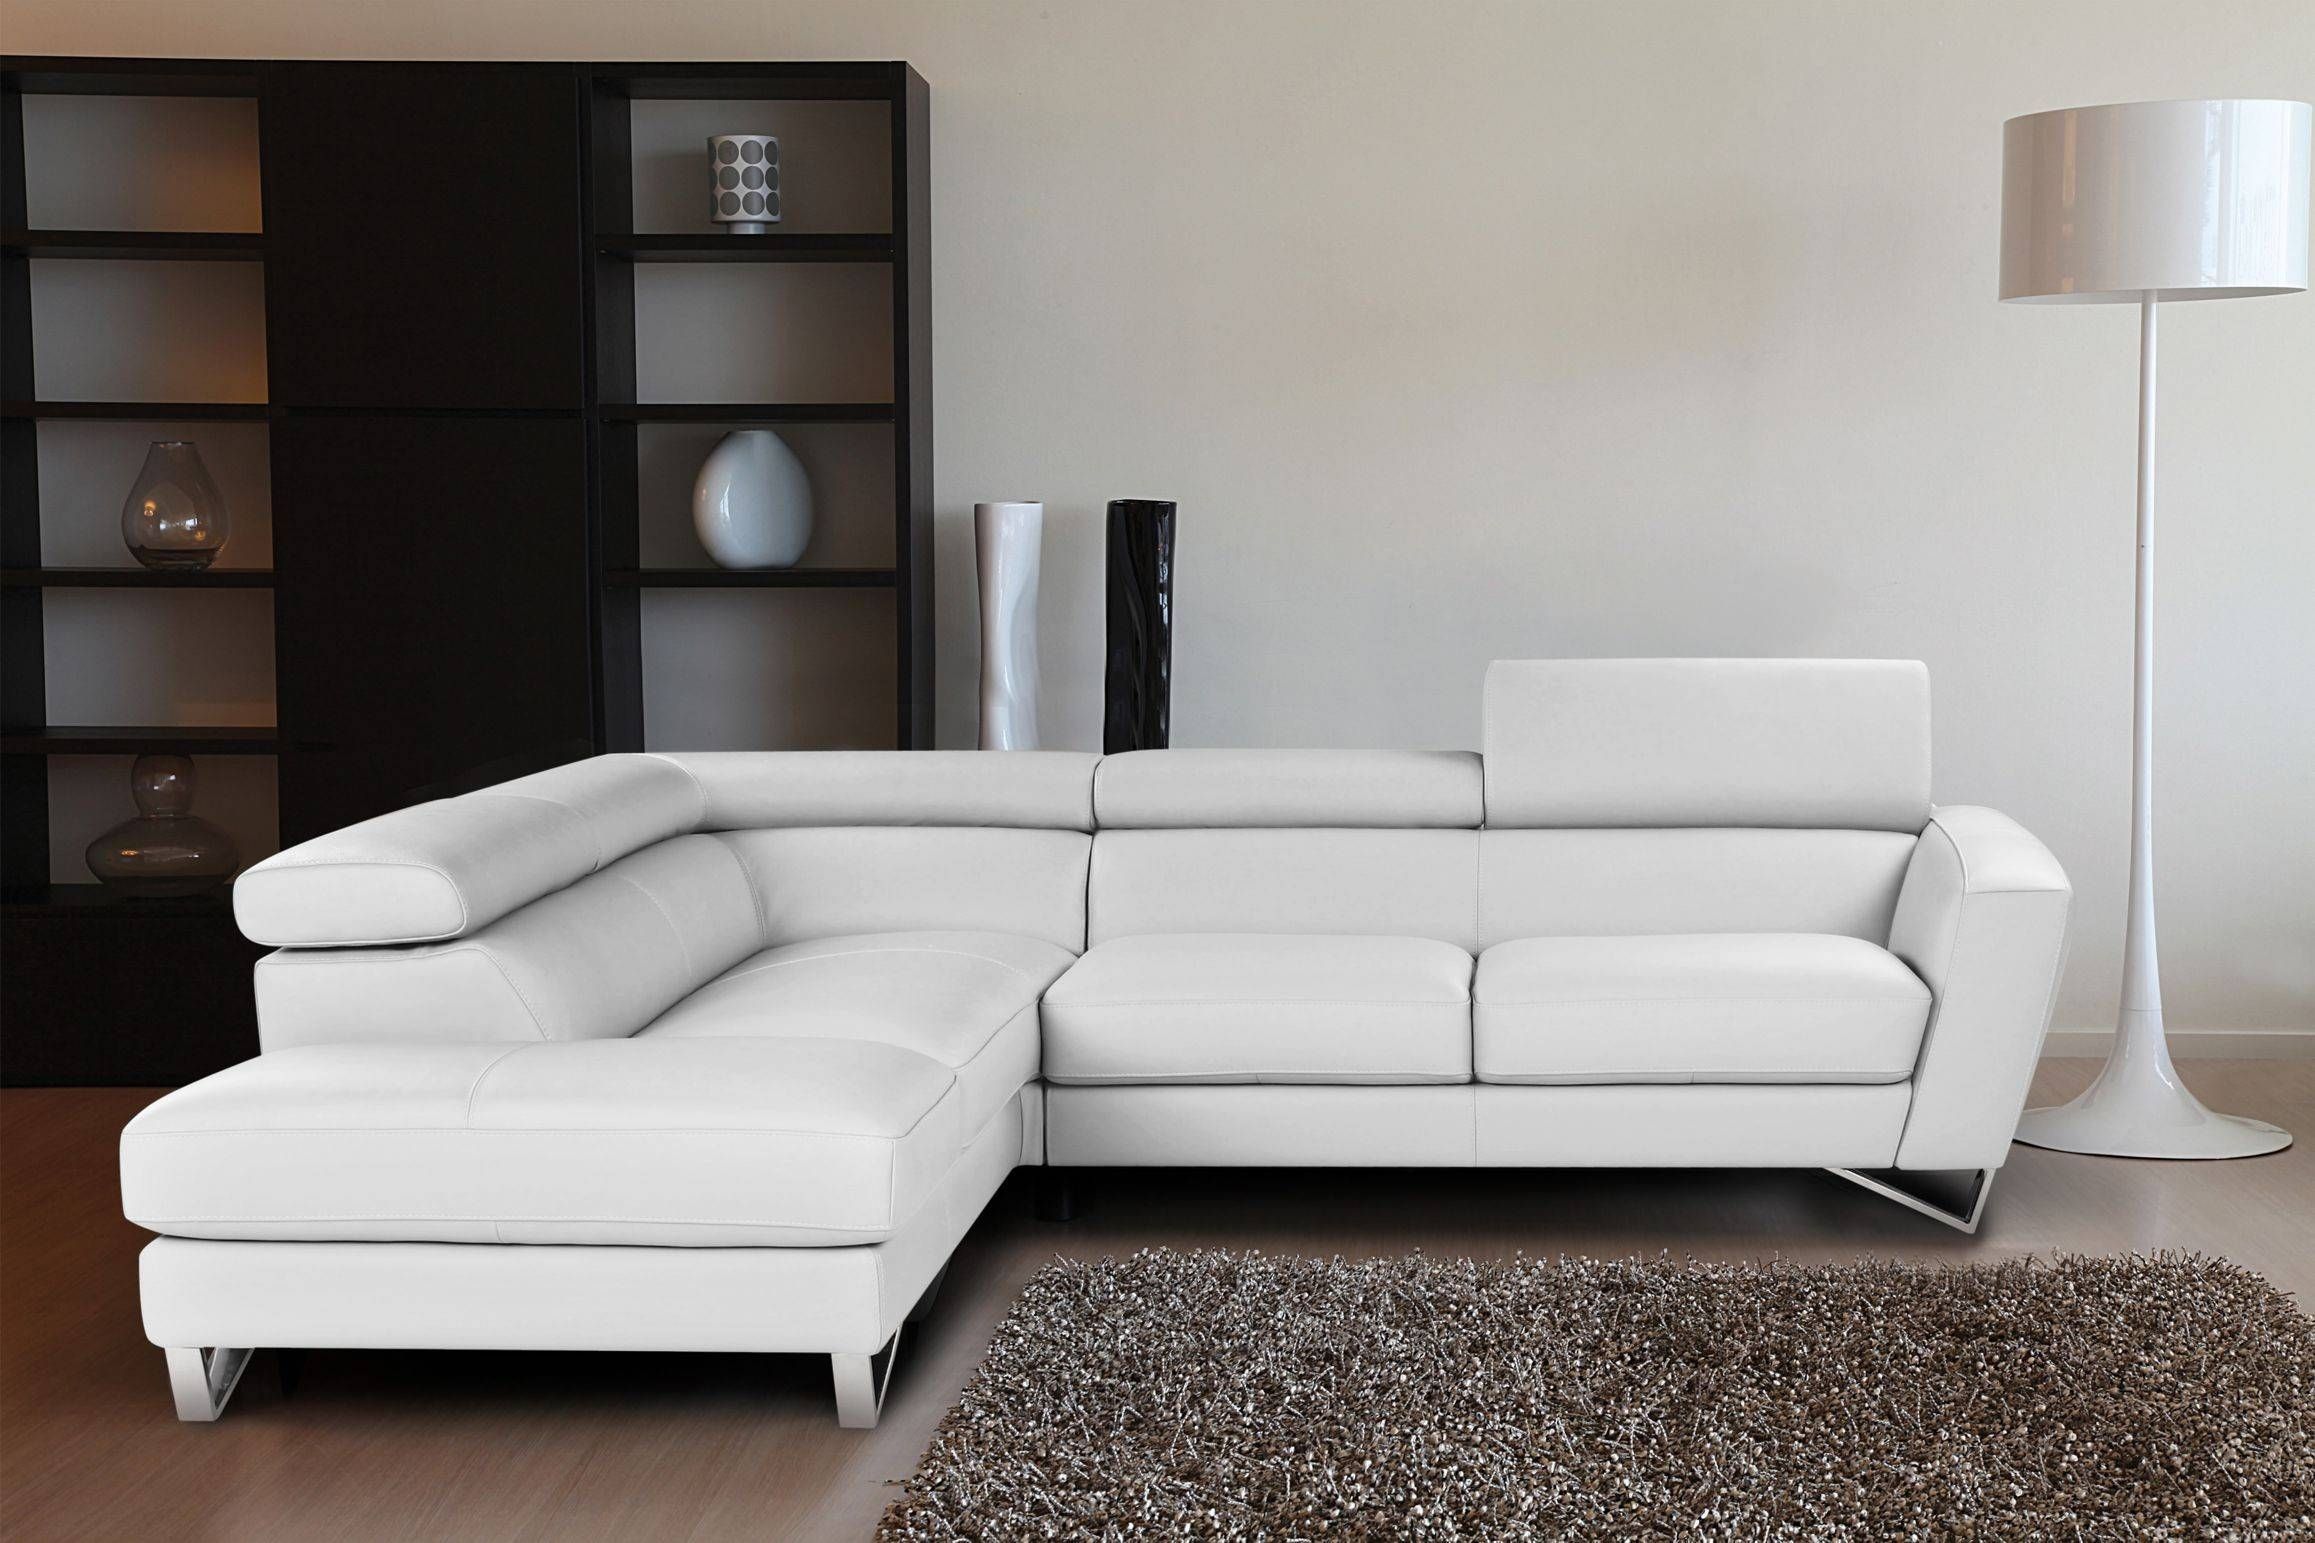 Sparta Italian Leather Modern Sectional Sofa Within Leather Modern Sectional Sofas (View 5 of 15)